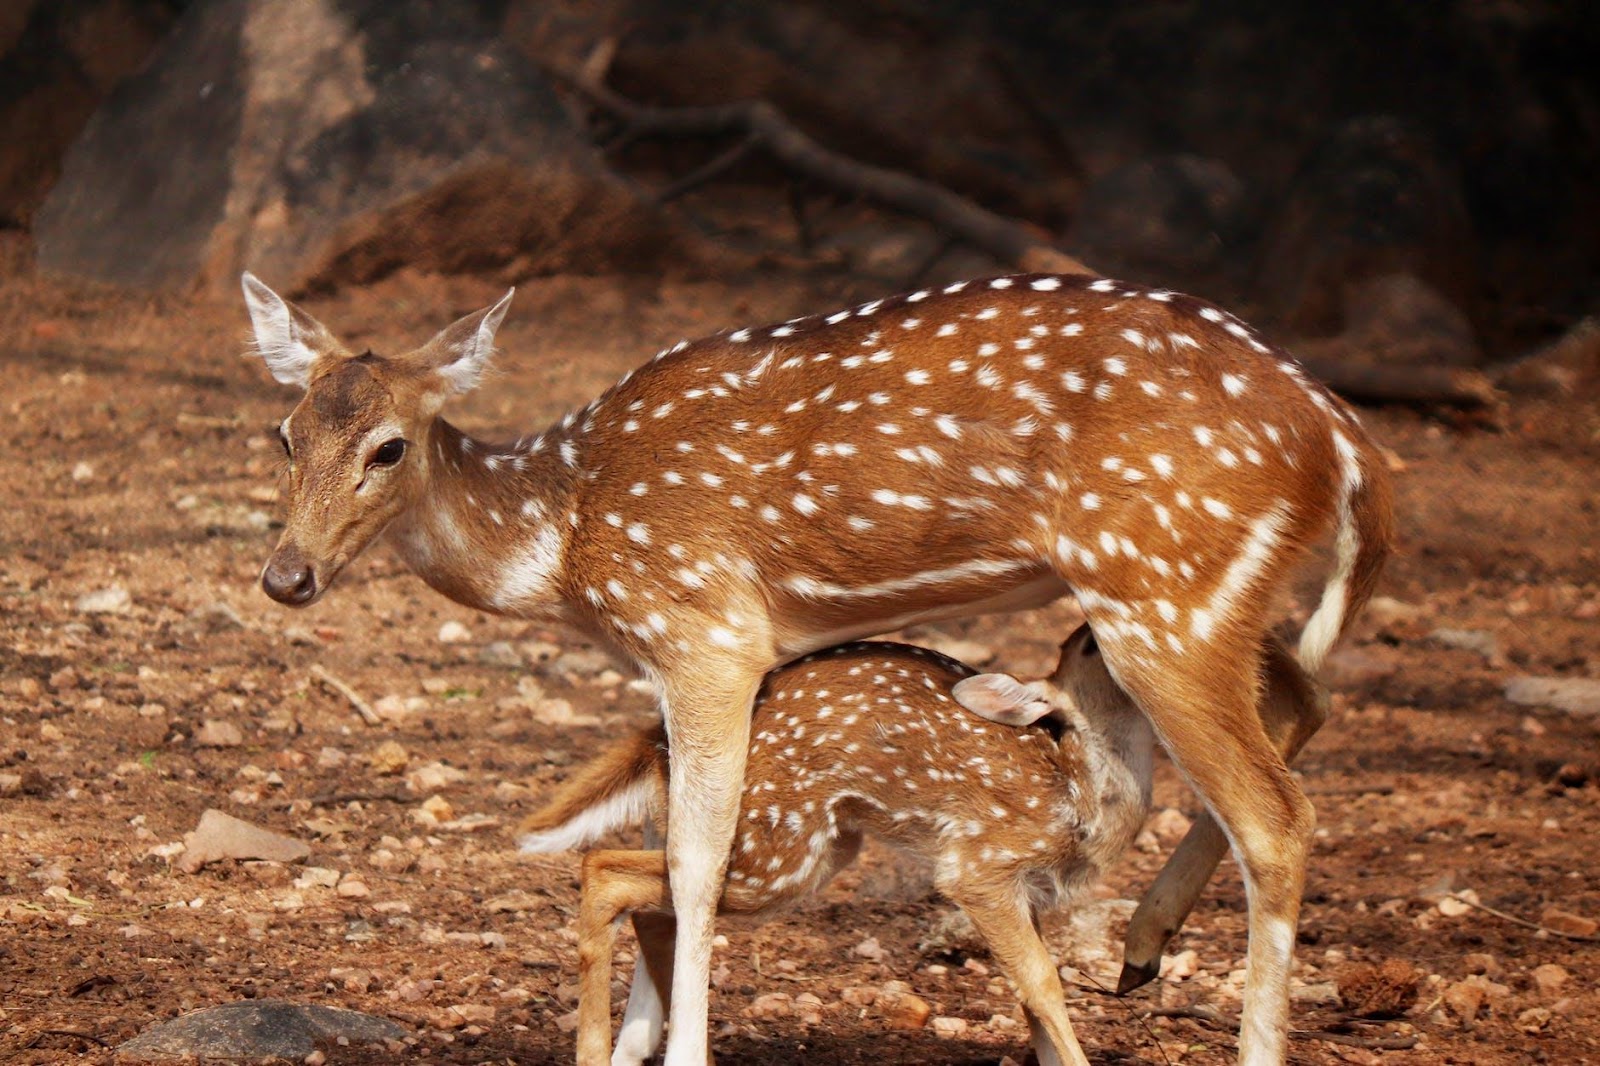 A Sri Lankan Axis Deer Nursing Her Fawn